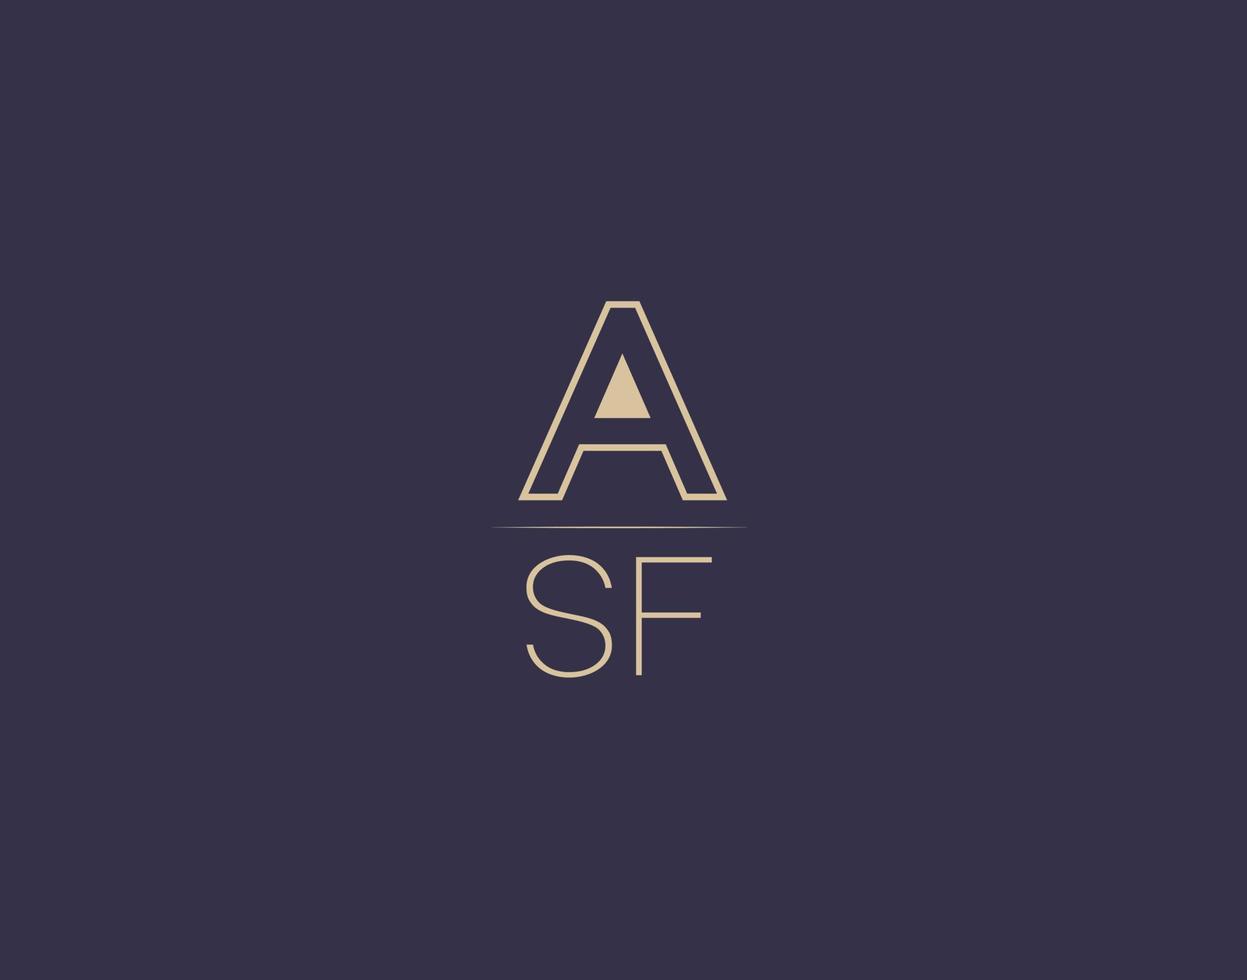 ASF letter logo design modern minimalist vector images